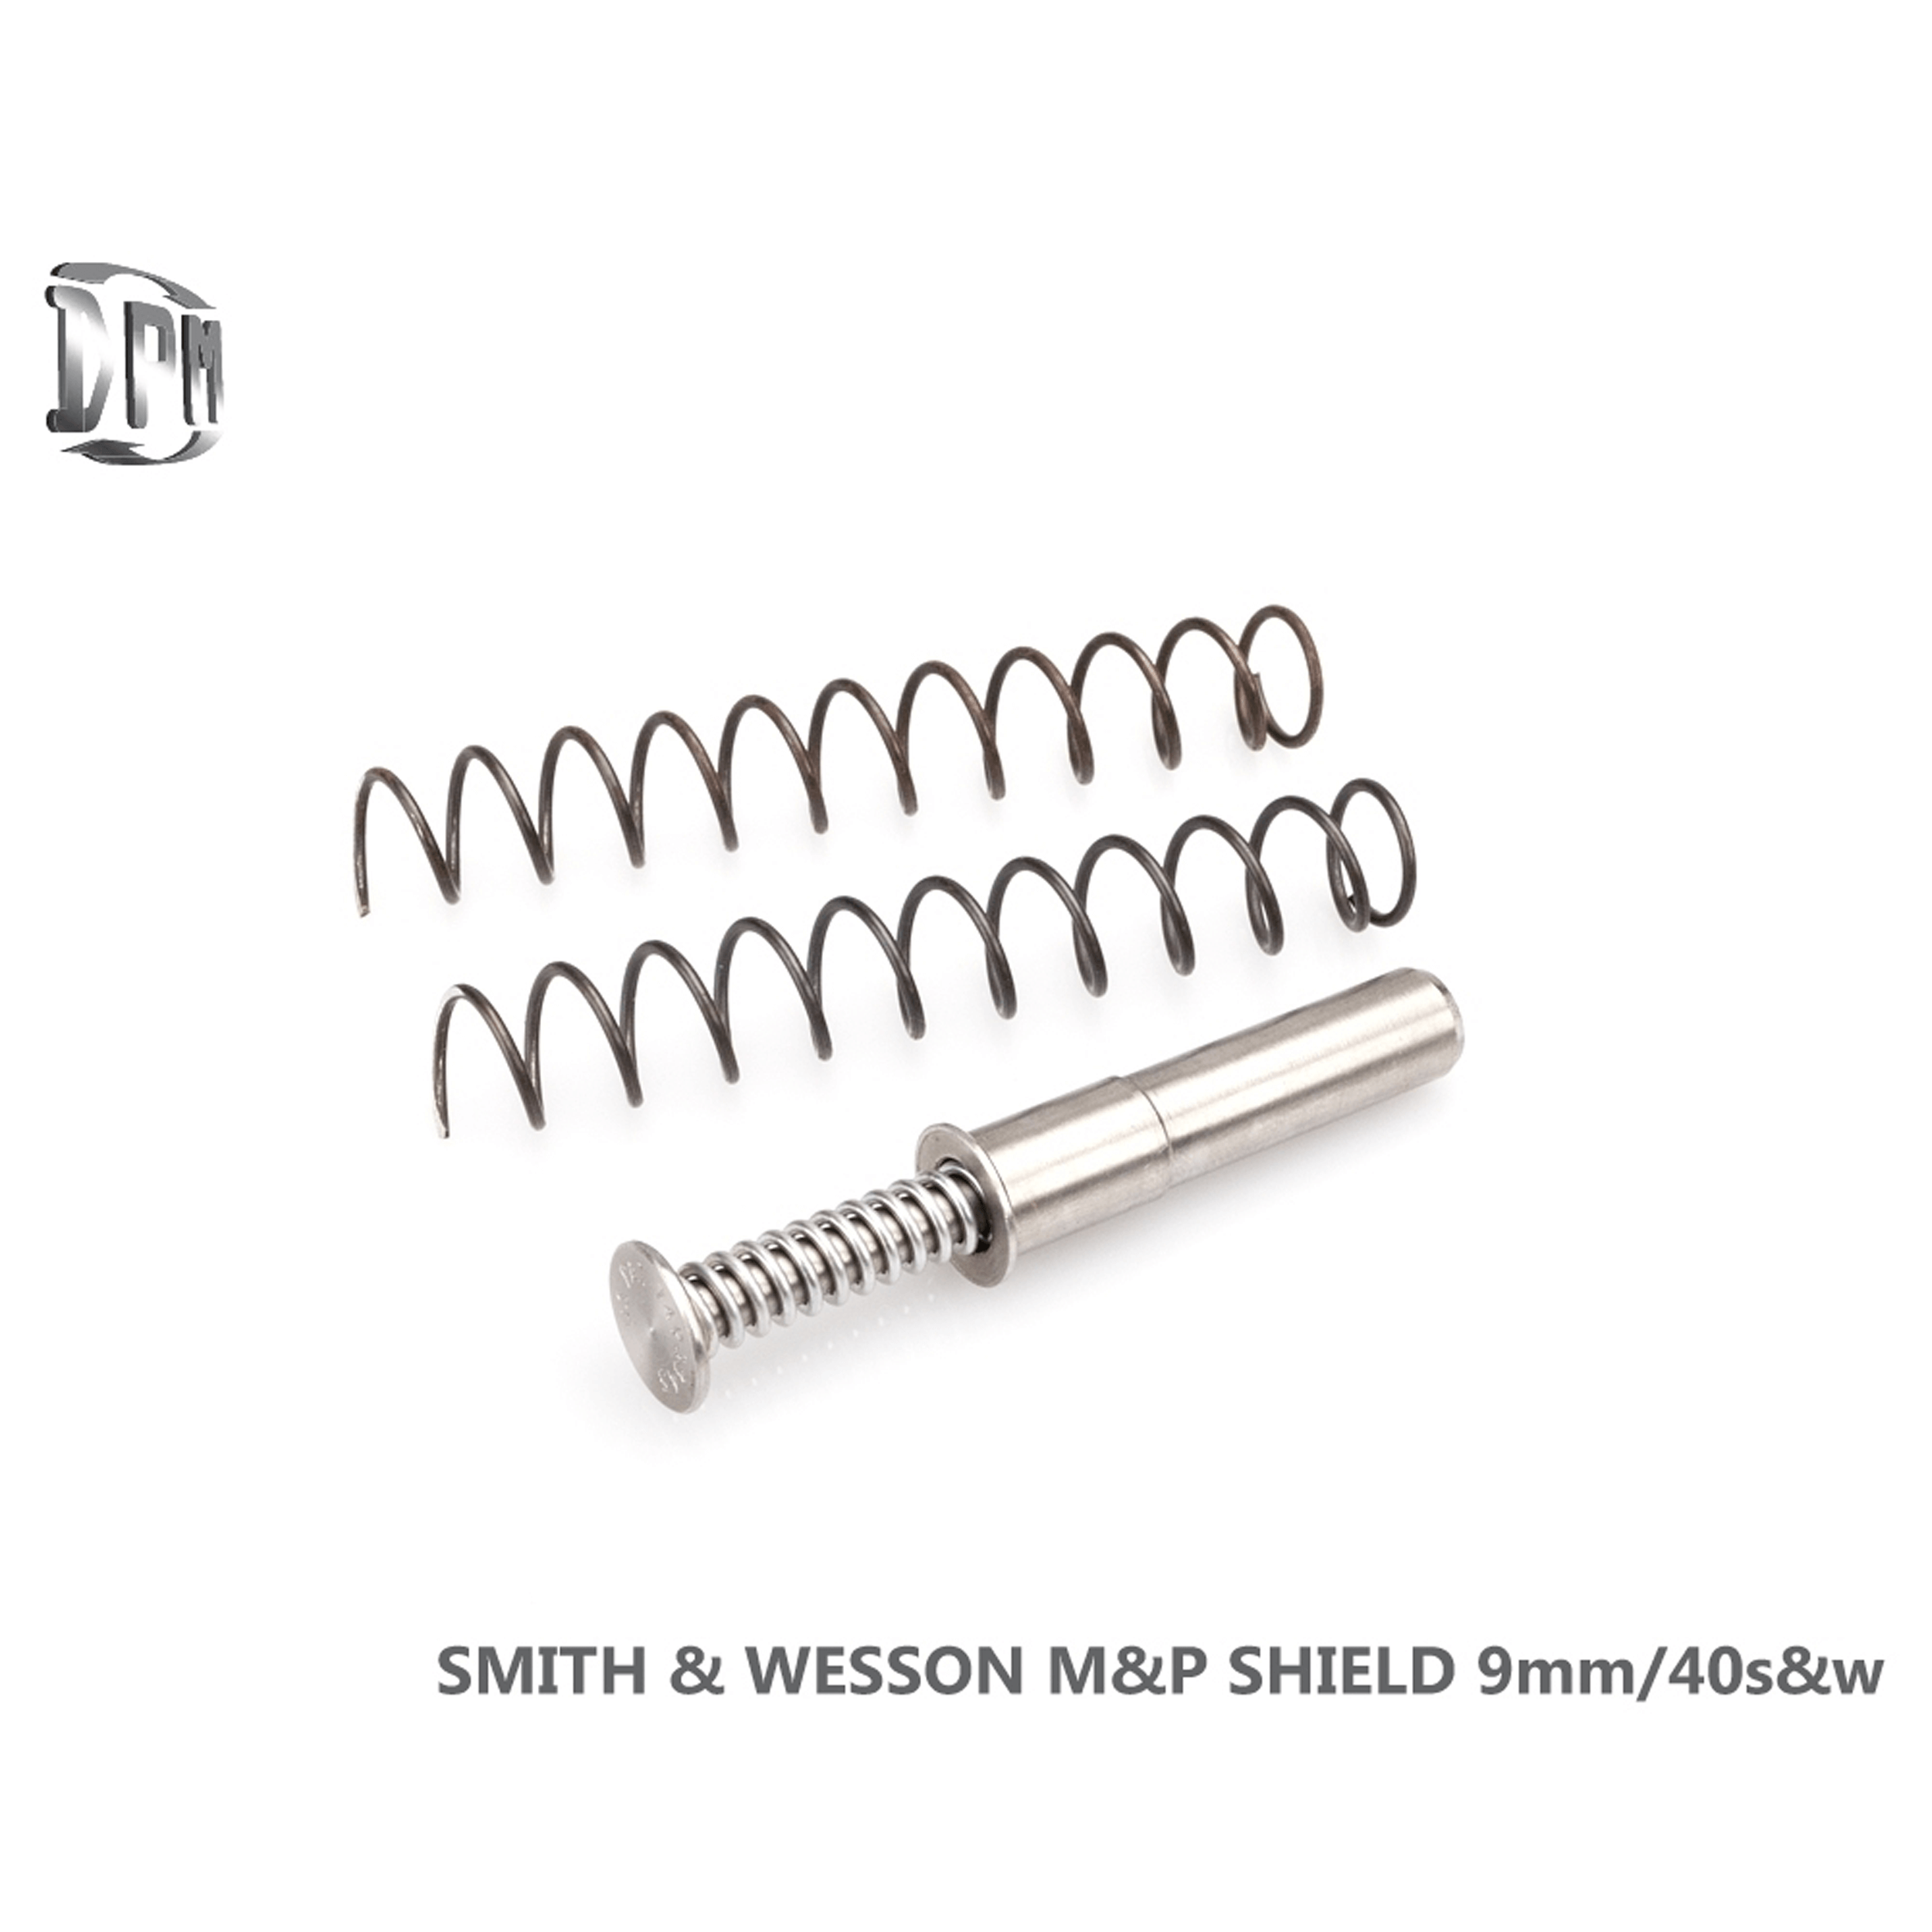 Smith & Wesson M&P Shield / 9mm - .40 S&W